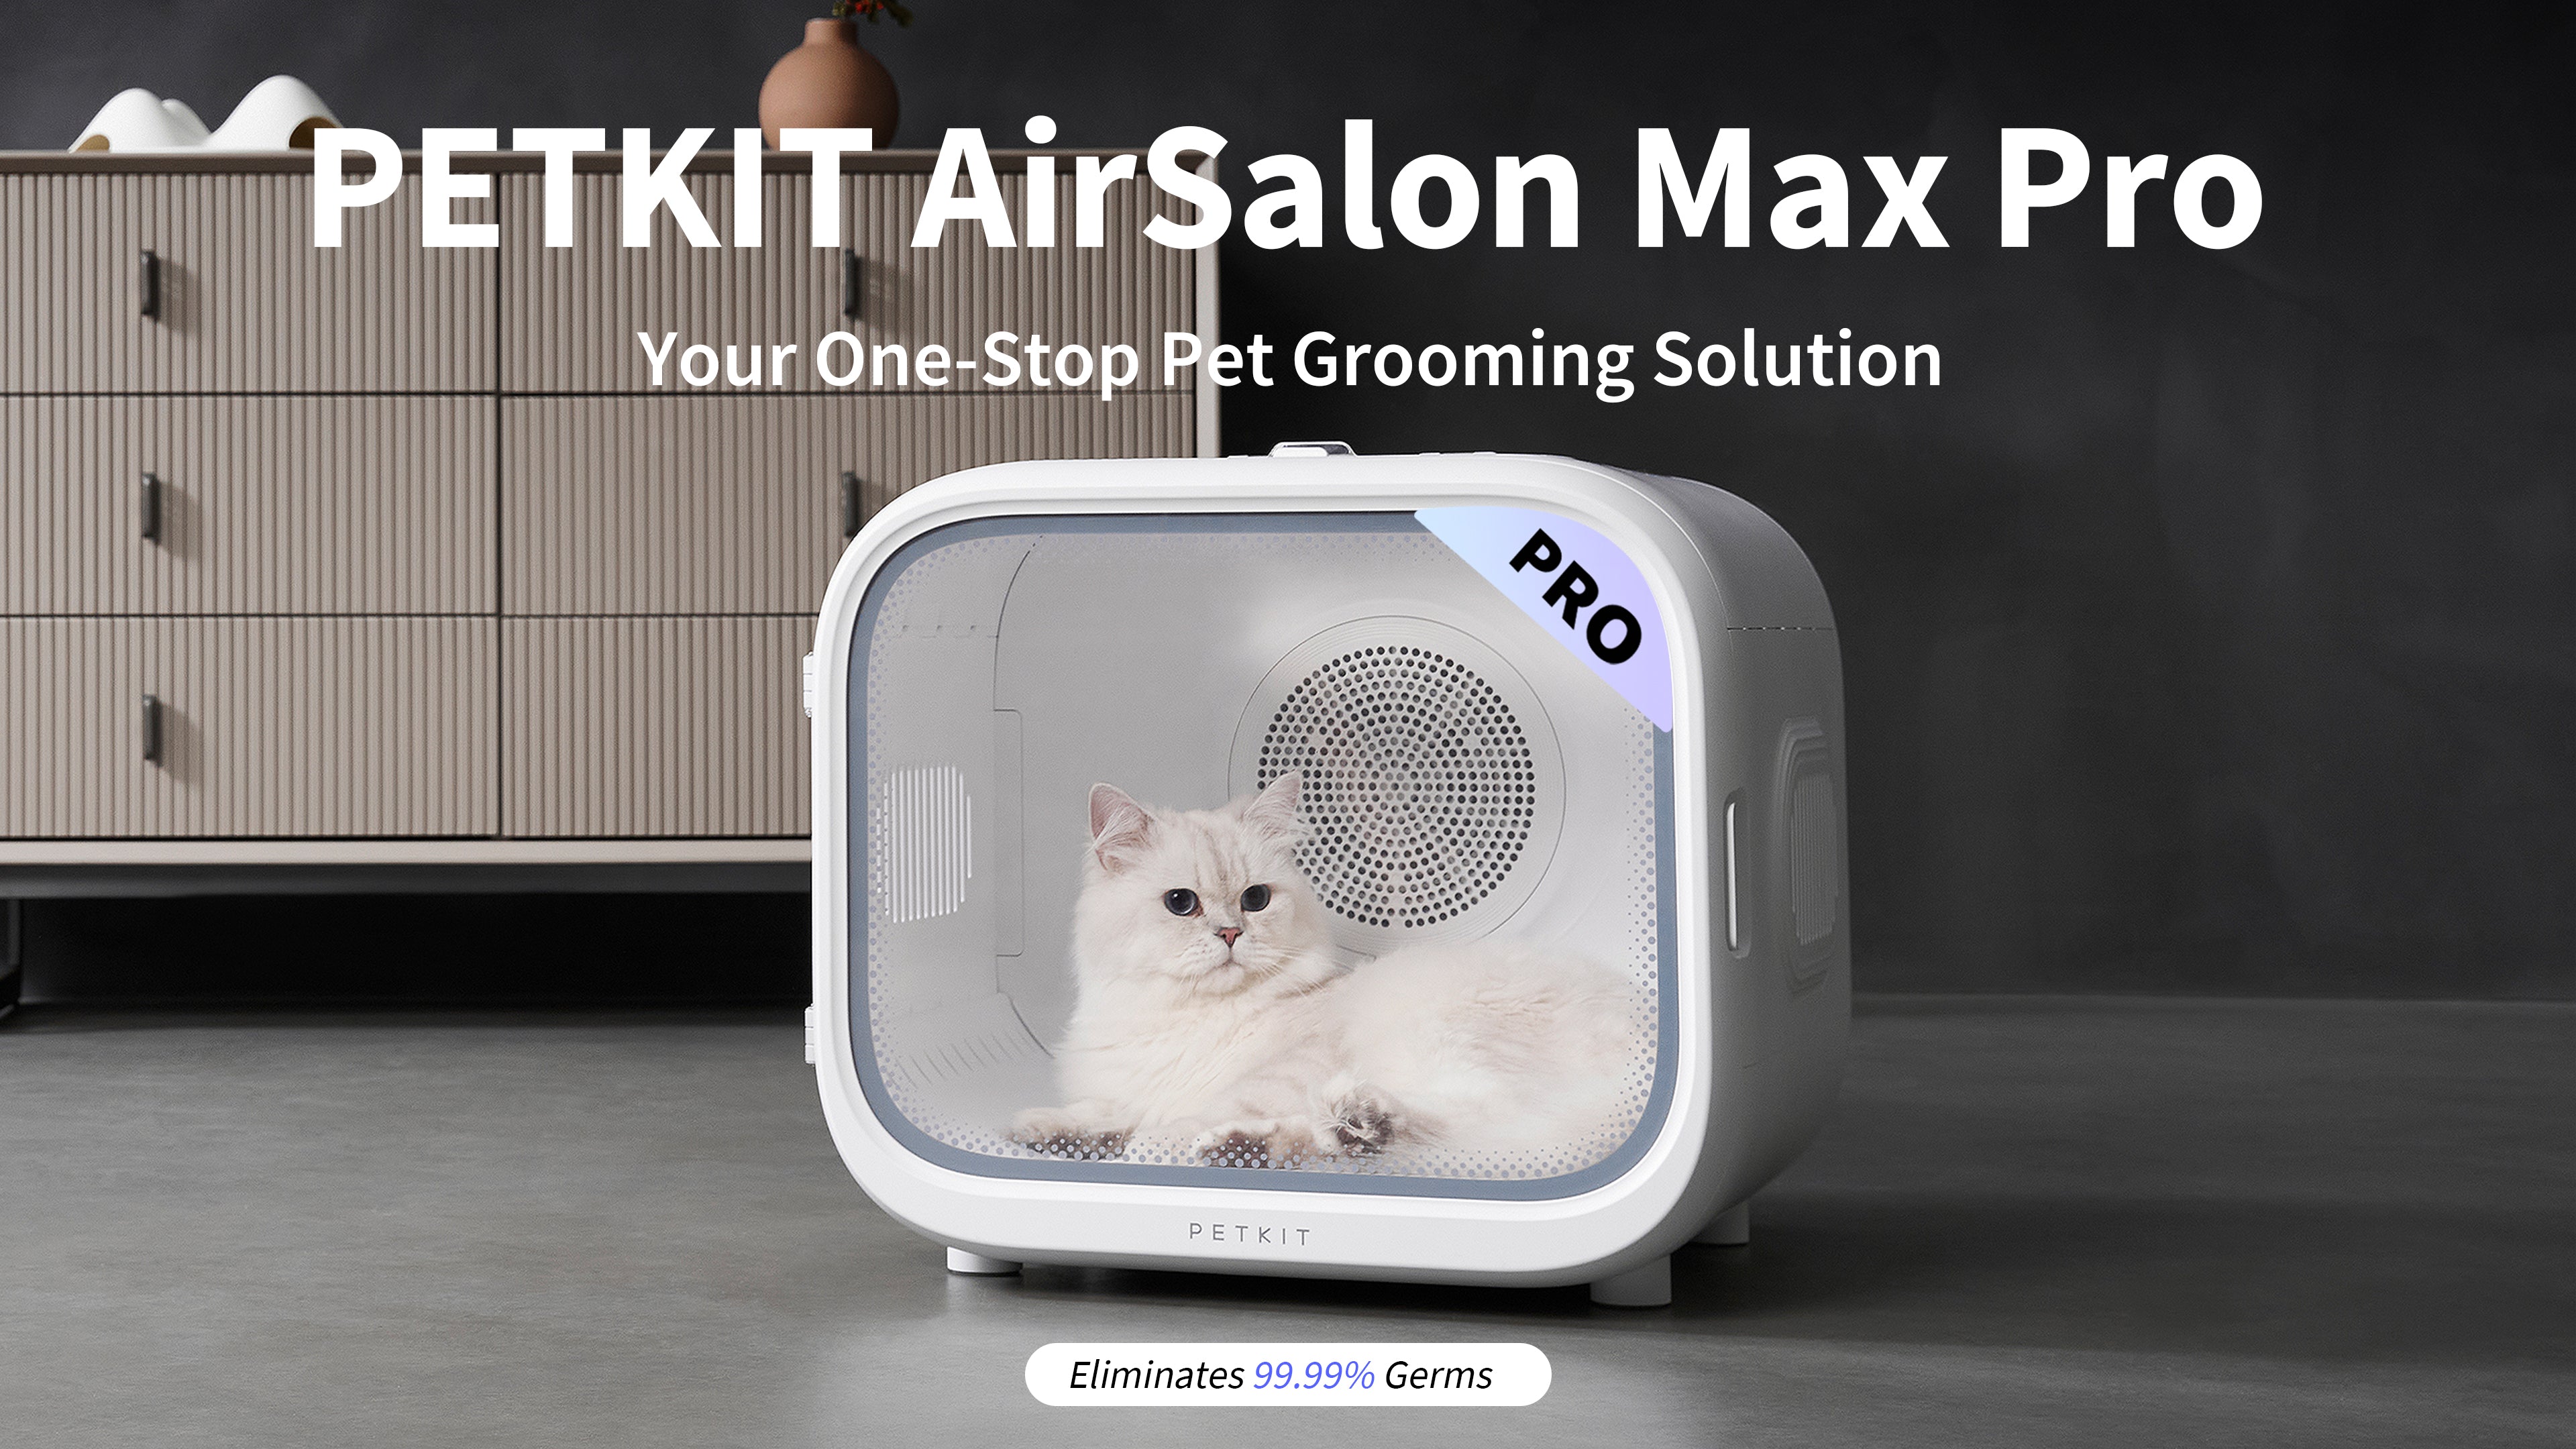 PETKIT AirSalon Max Pro